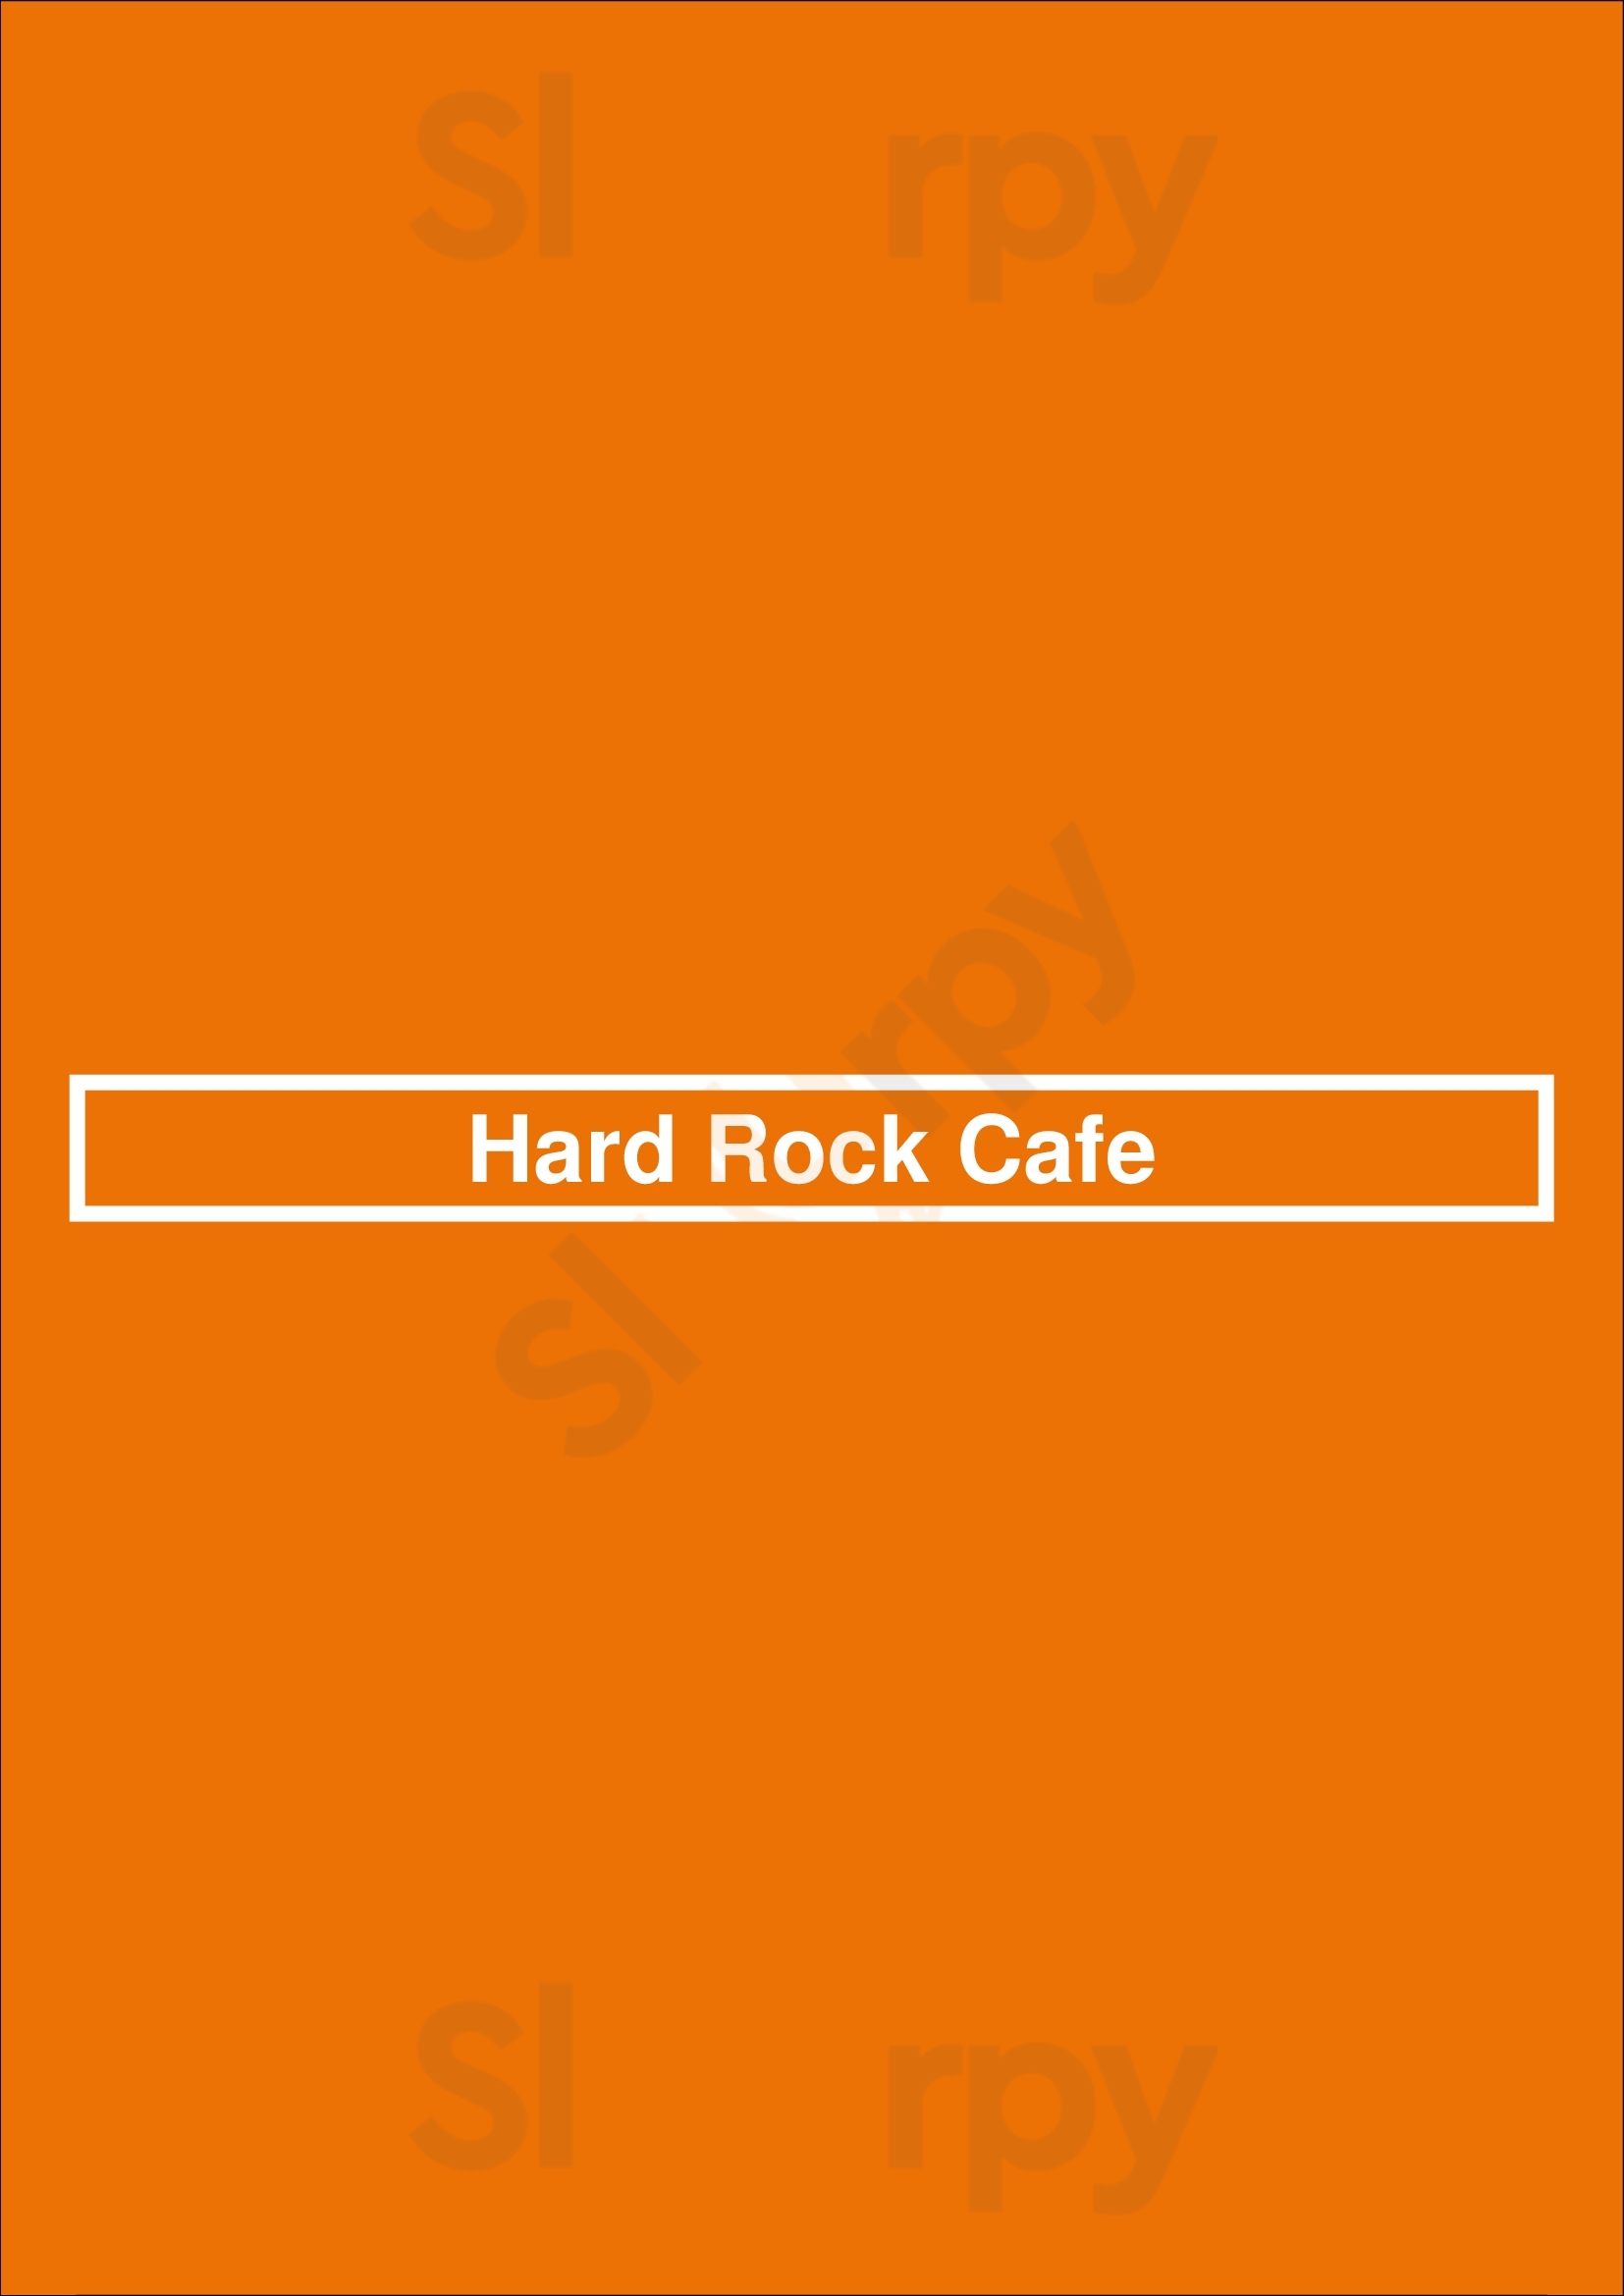 Hard Rock Cafe Pittsburgh Menu - 1